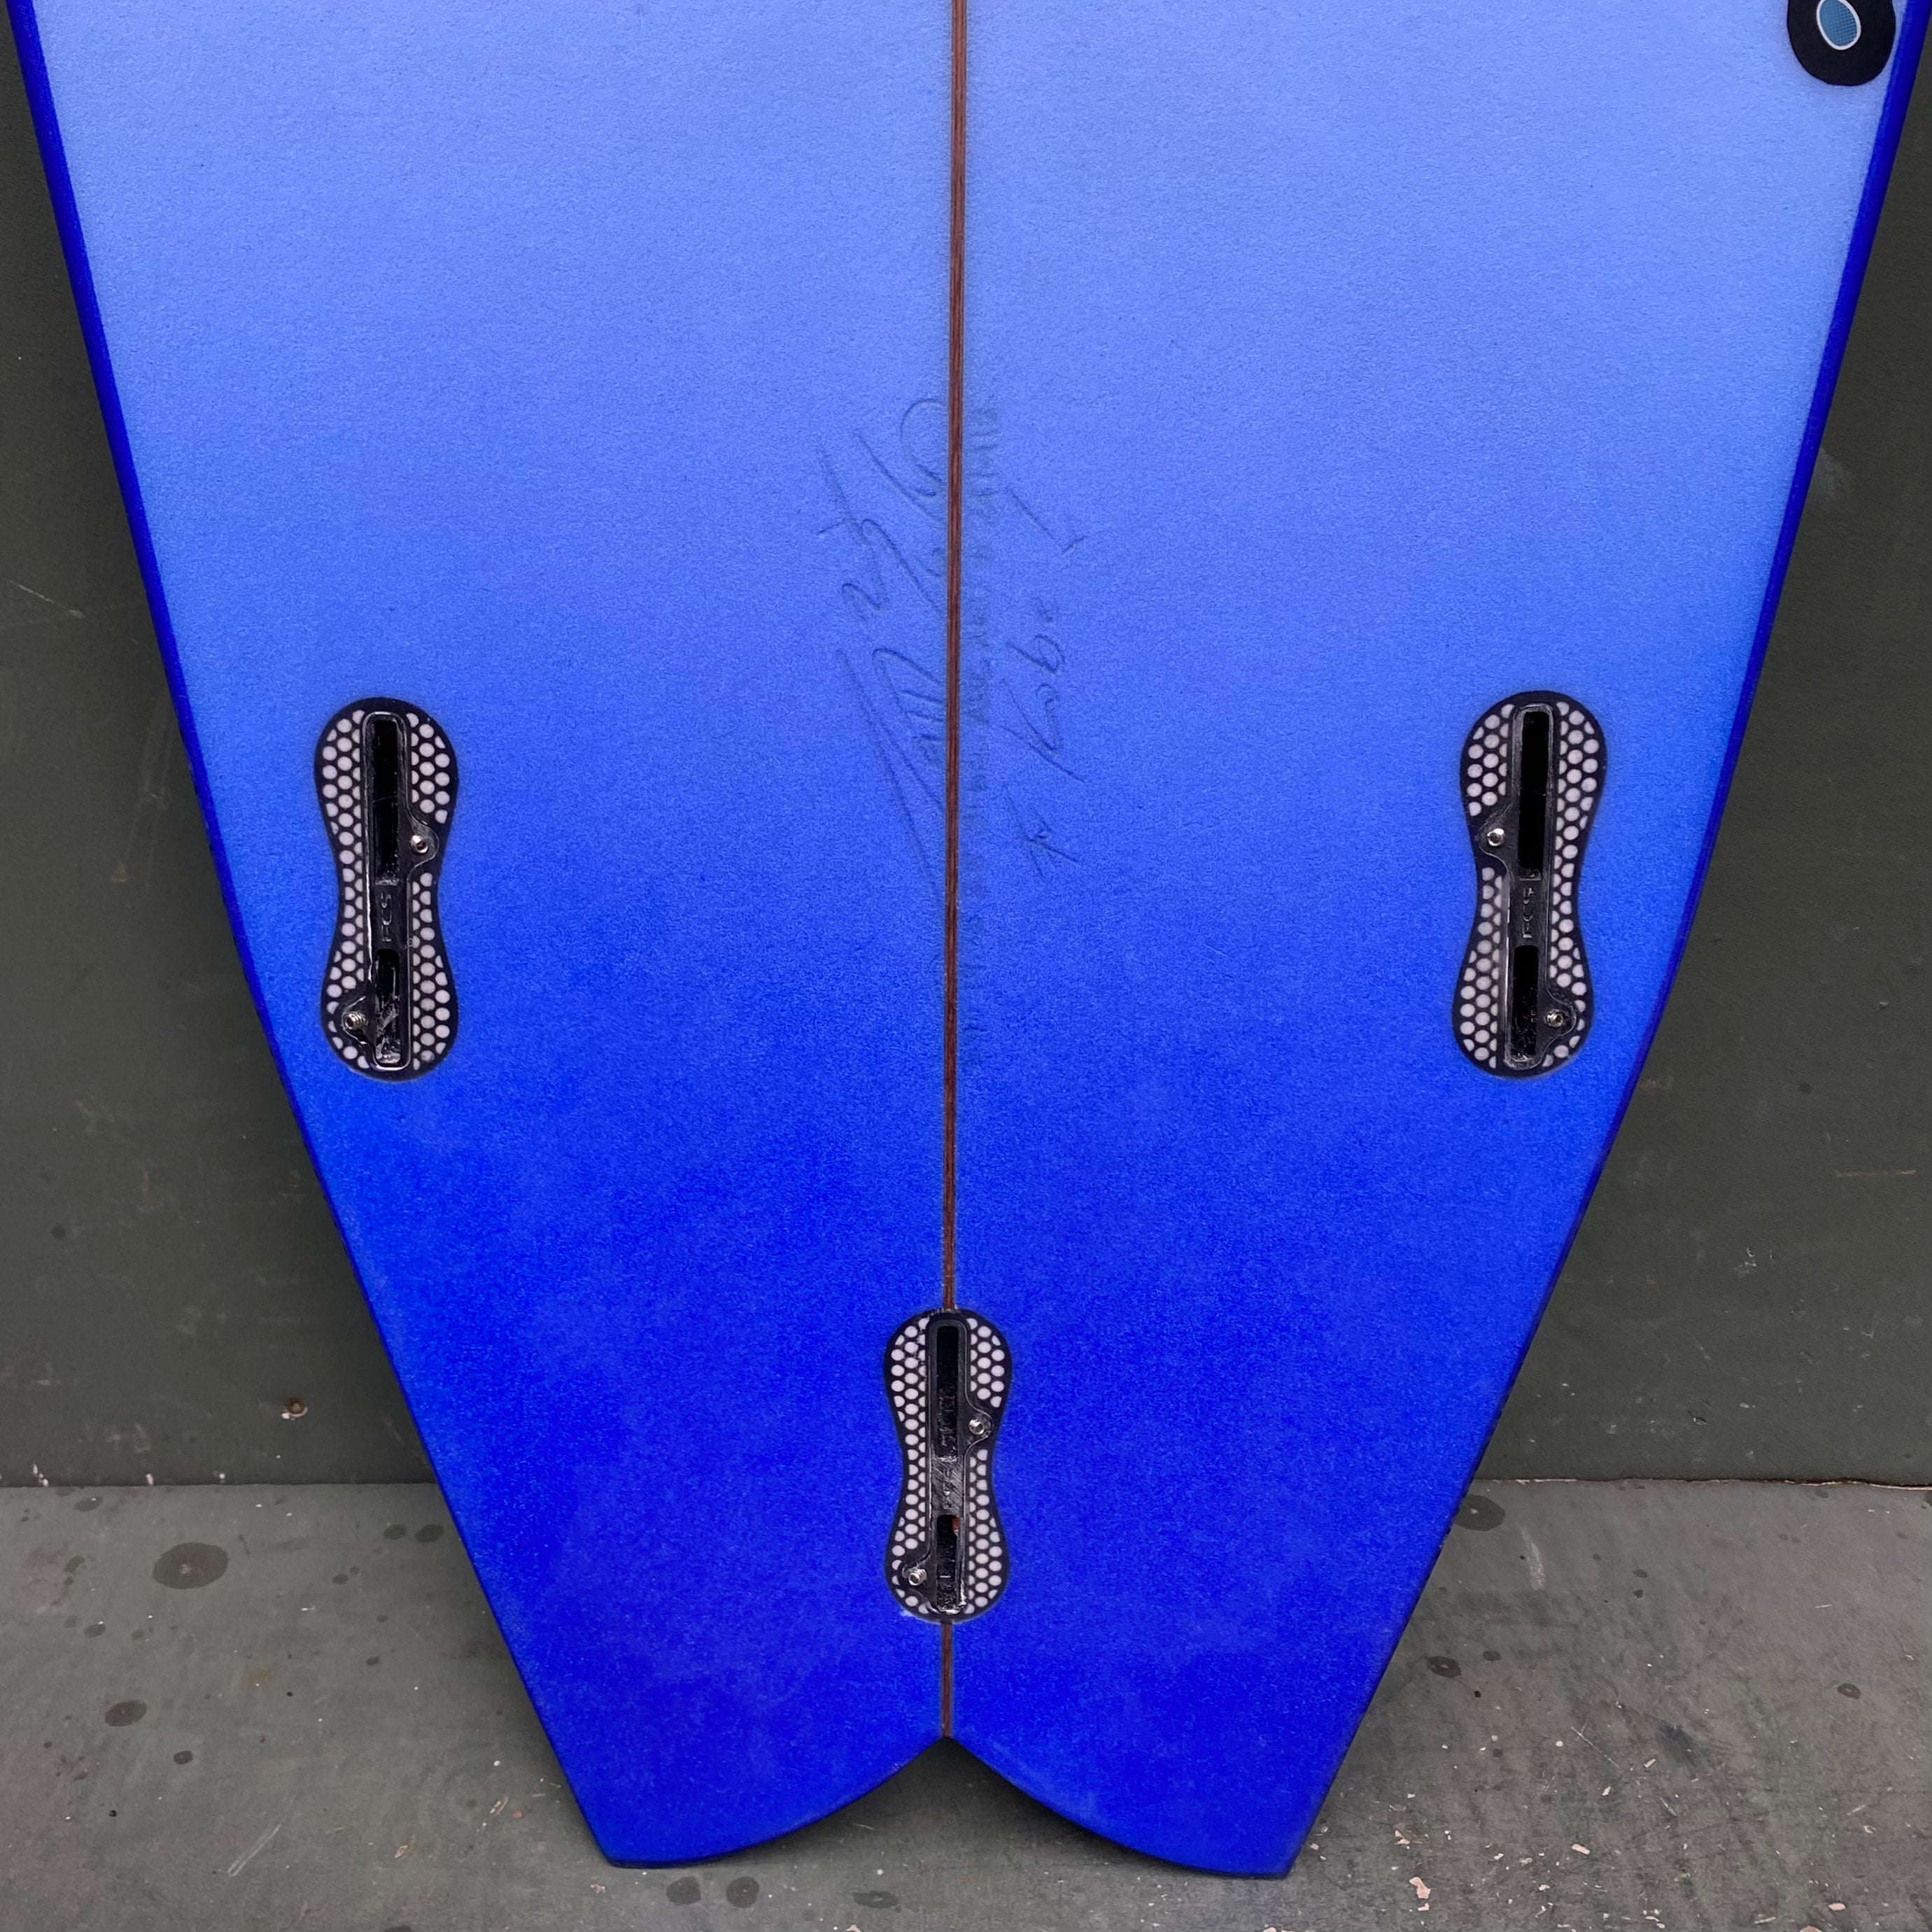 USED Lost Surfboards - 5'9" Swordfish Surfboard - Seaside Surf Shop 